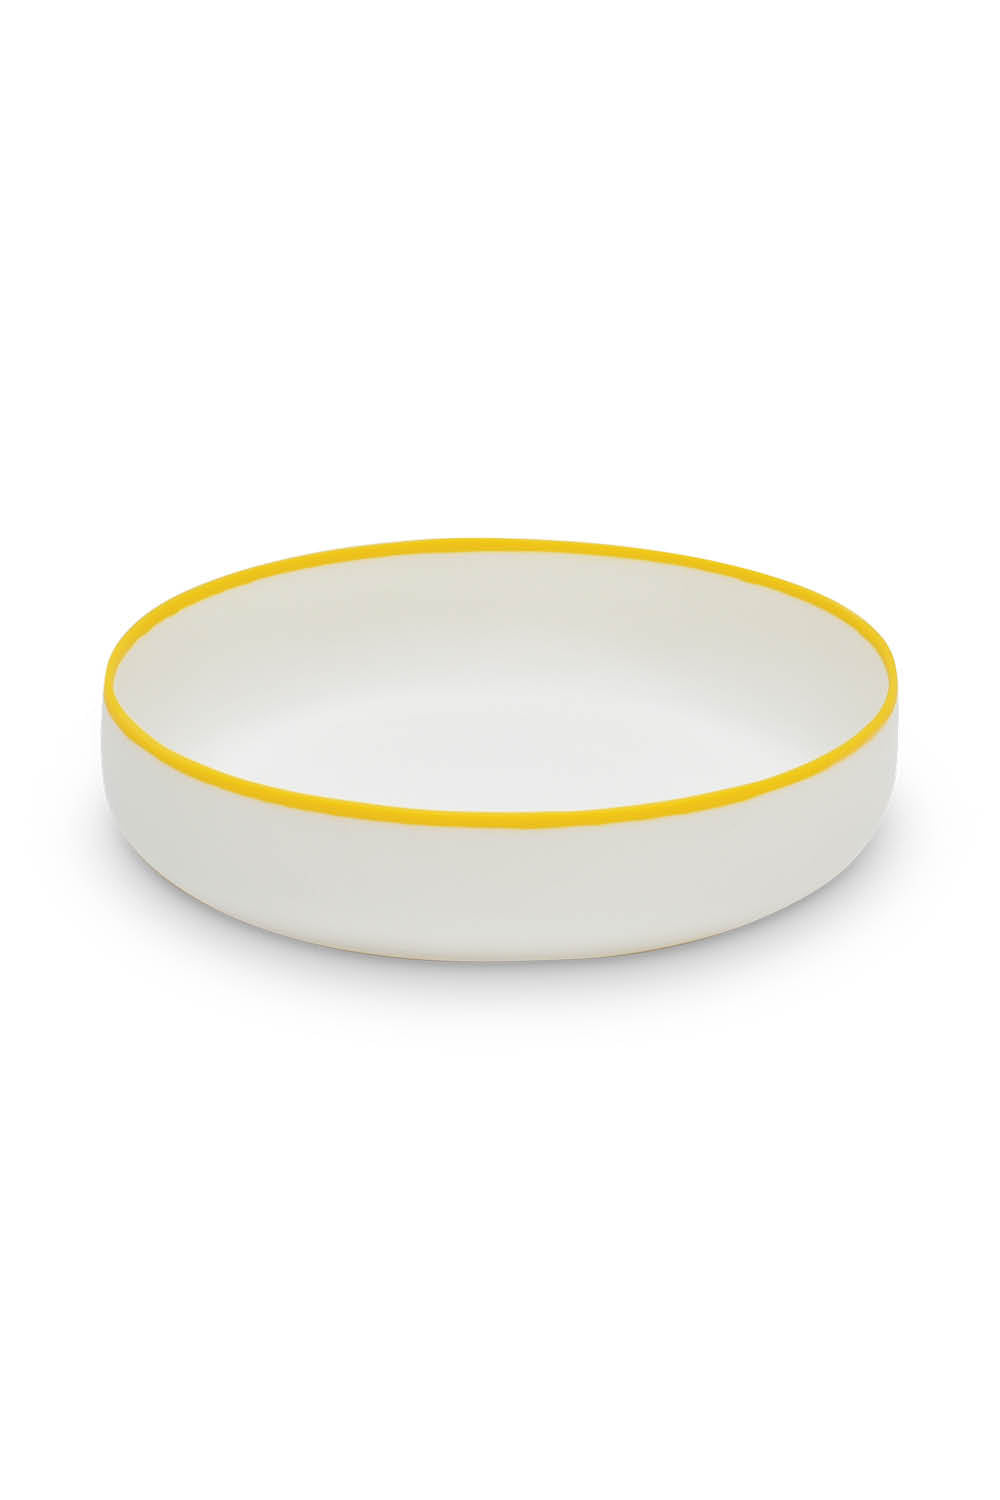 LIGNE Extra Large Bowl in White With Sunshine Yellow Rim